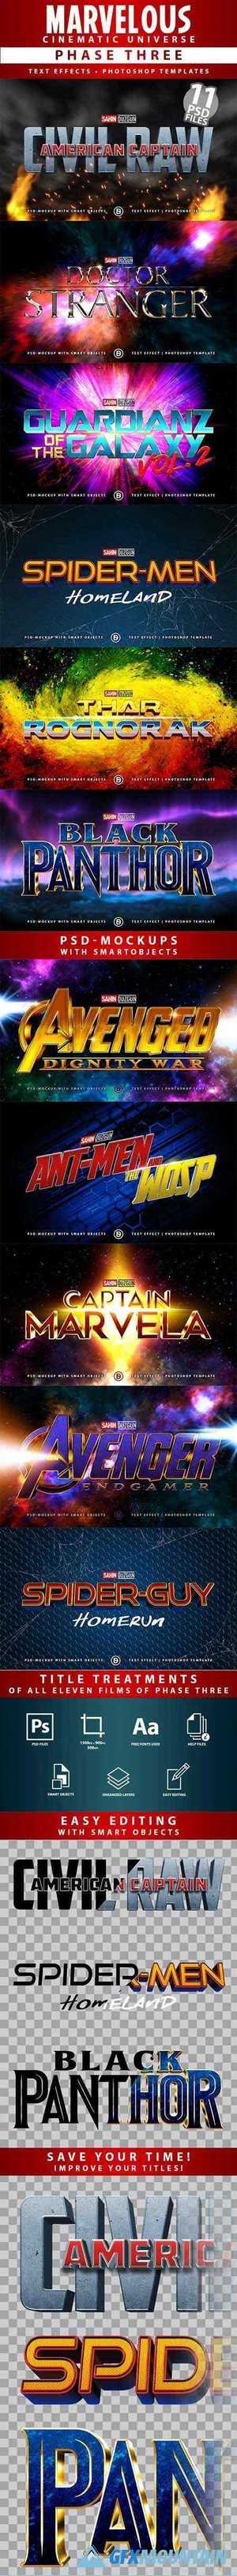 Marvelous Cinematic Universe - Phase Three 26501541